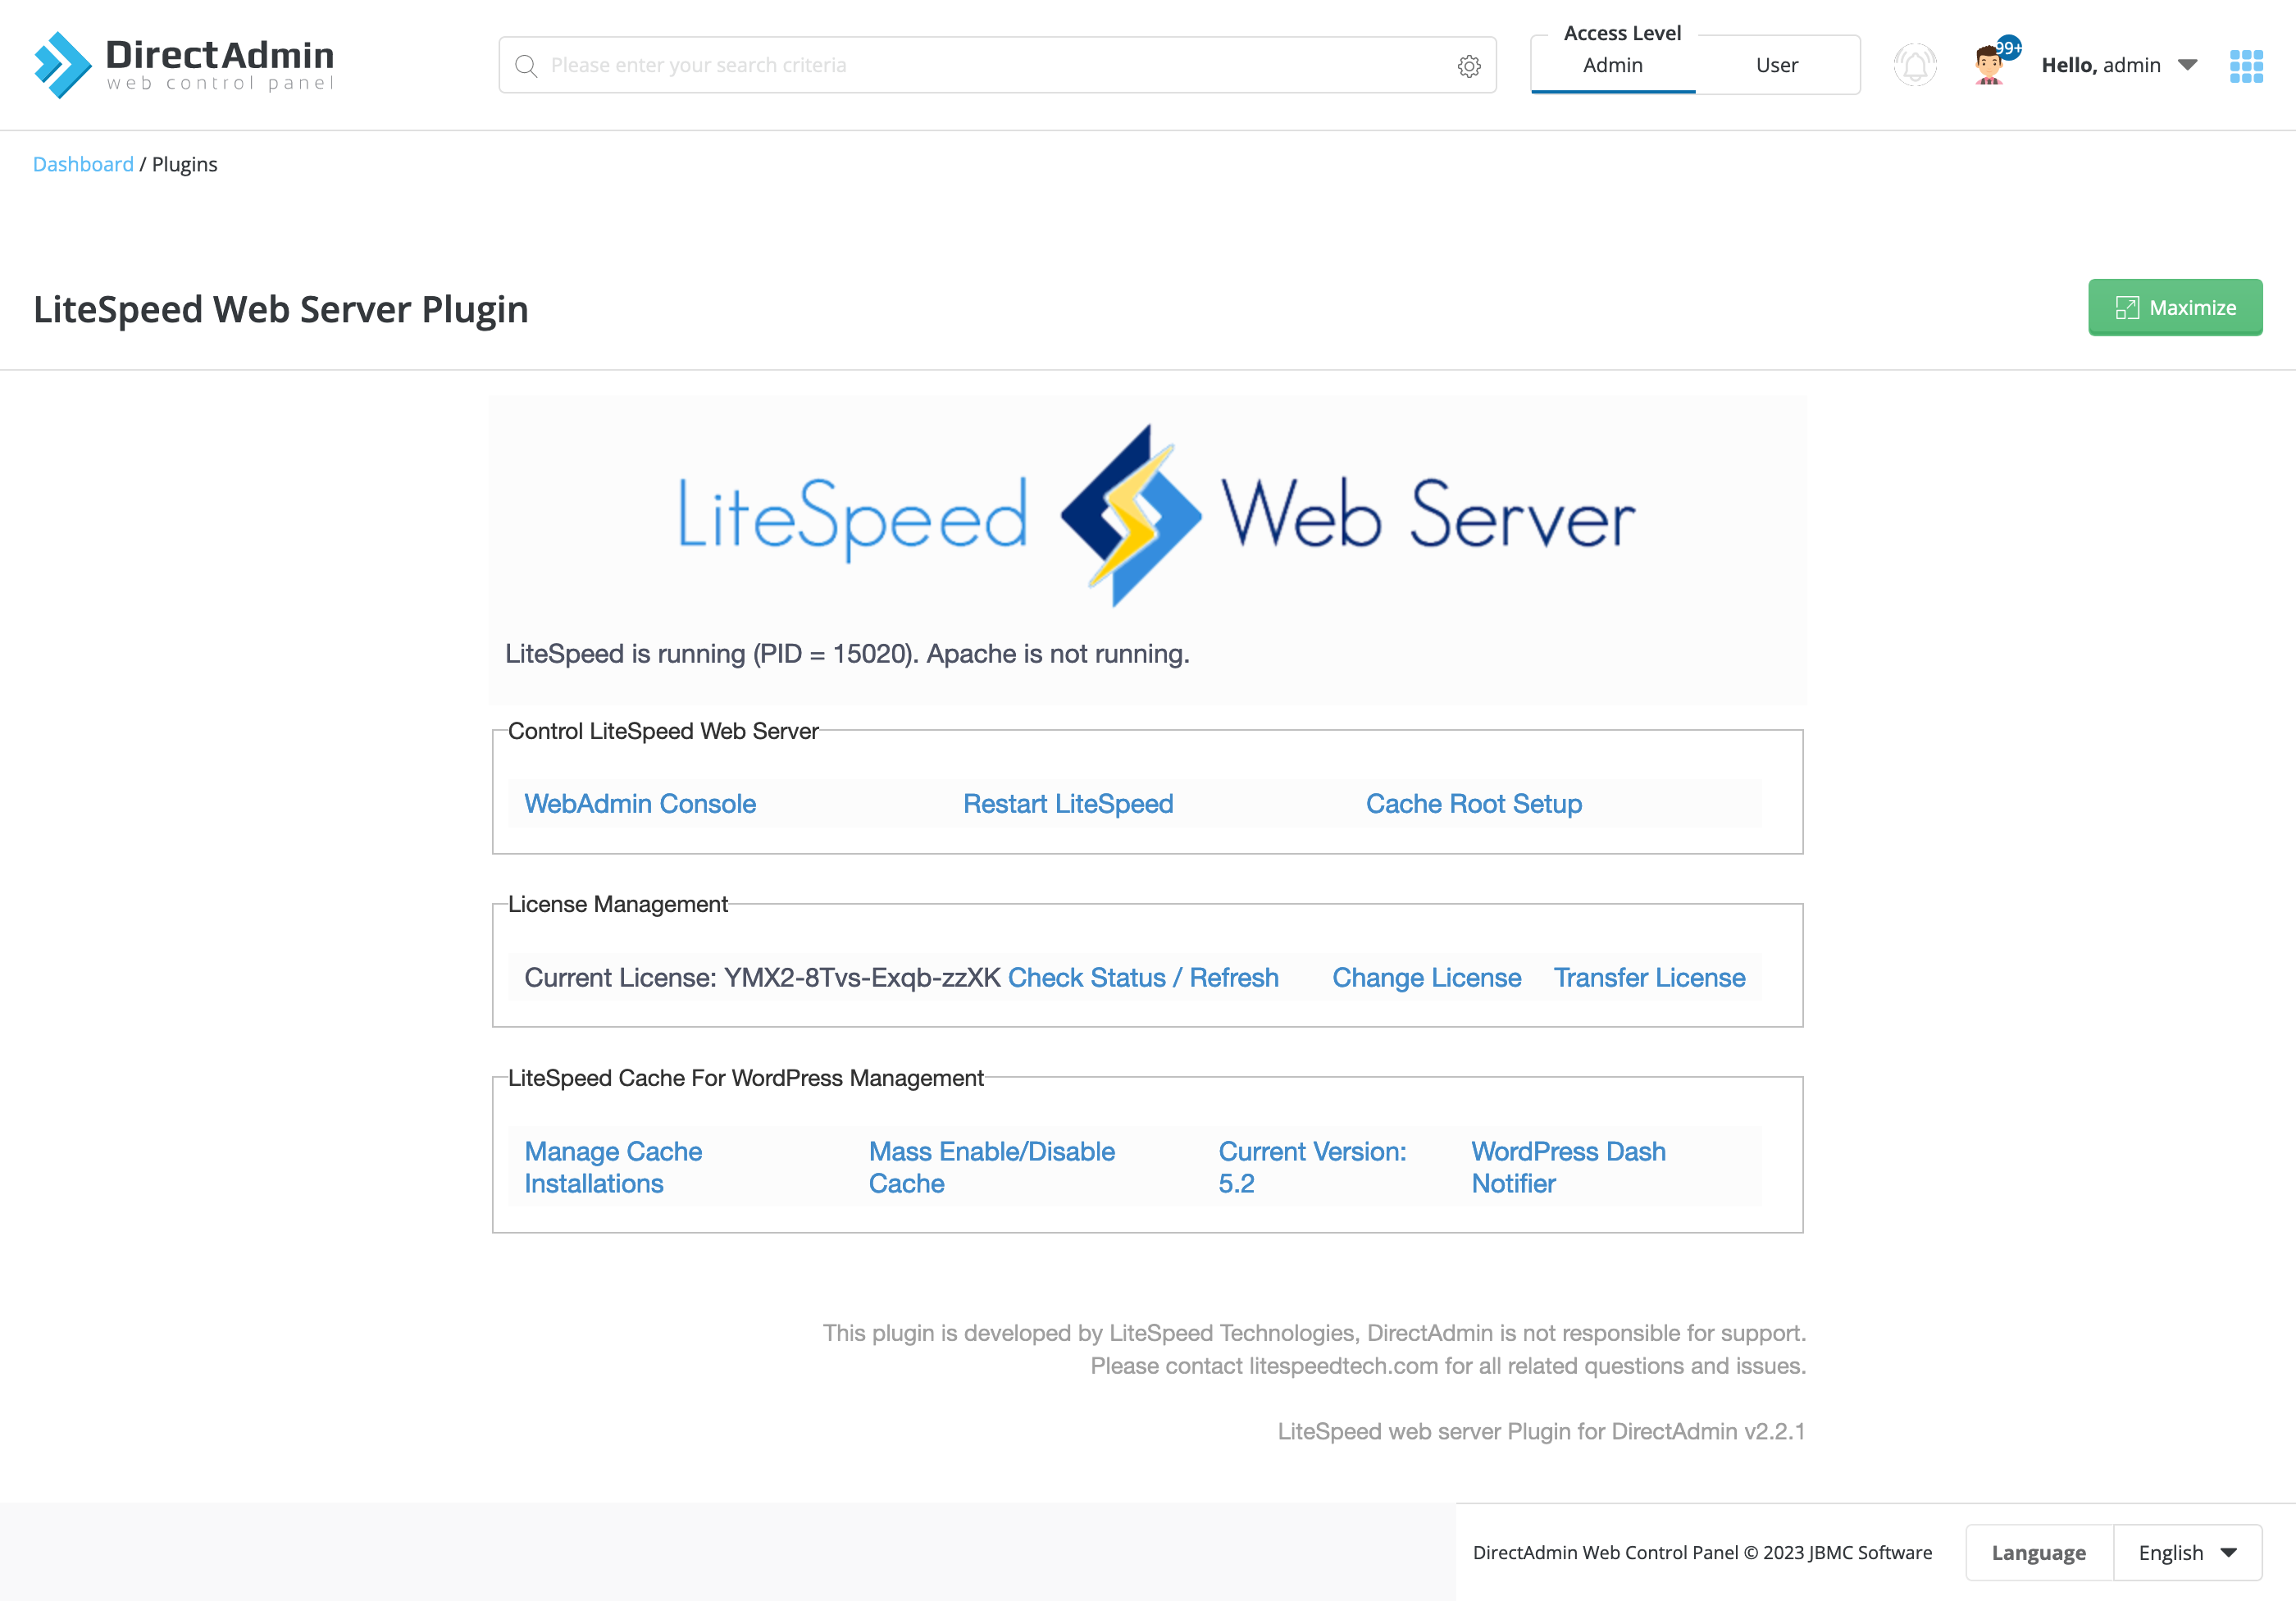 LiteSpeed Dashboard Screenshot using DirectAdmin Control Panel